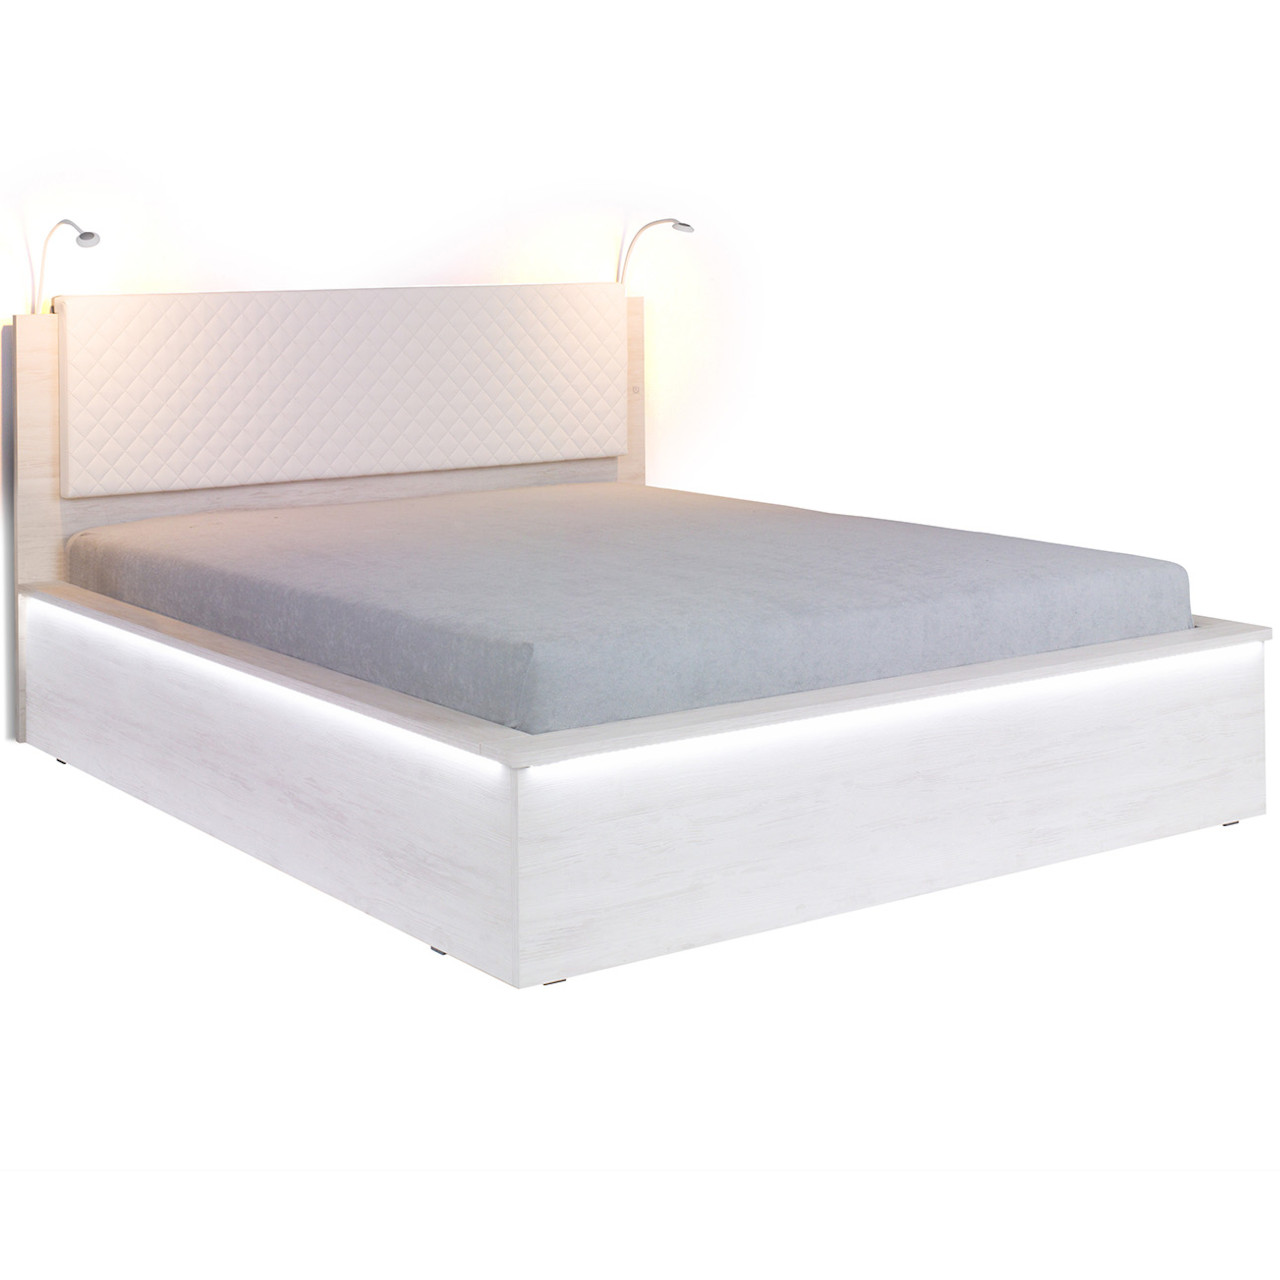 Bed 160x200 DENVER DV12 white oak / white quilting SALE